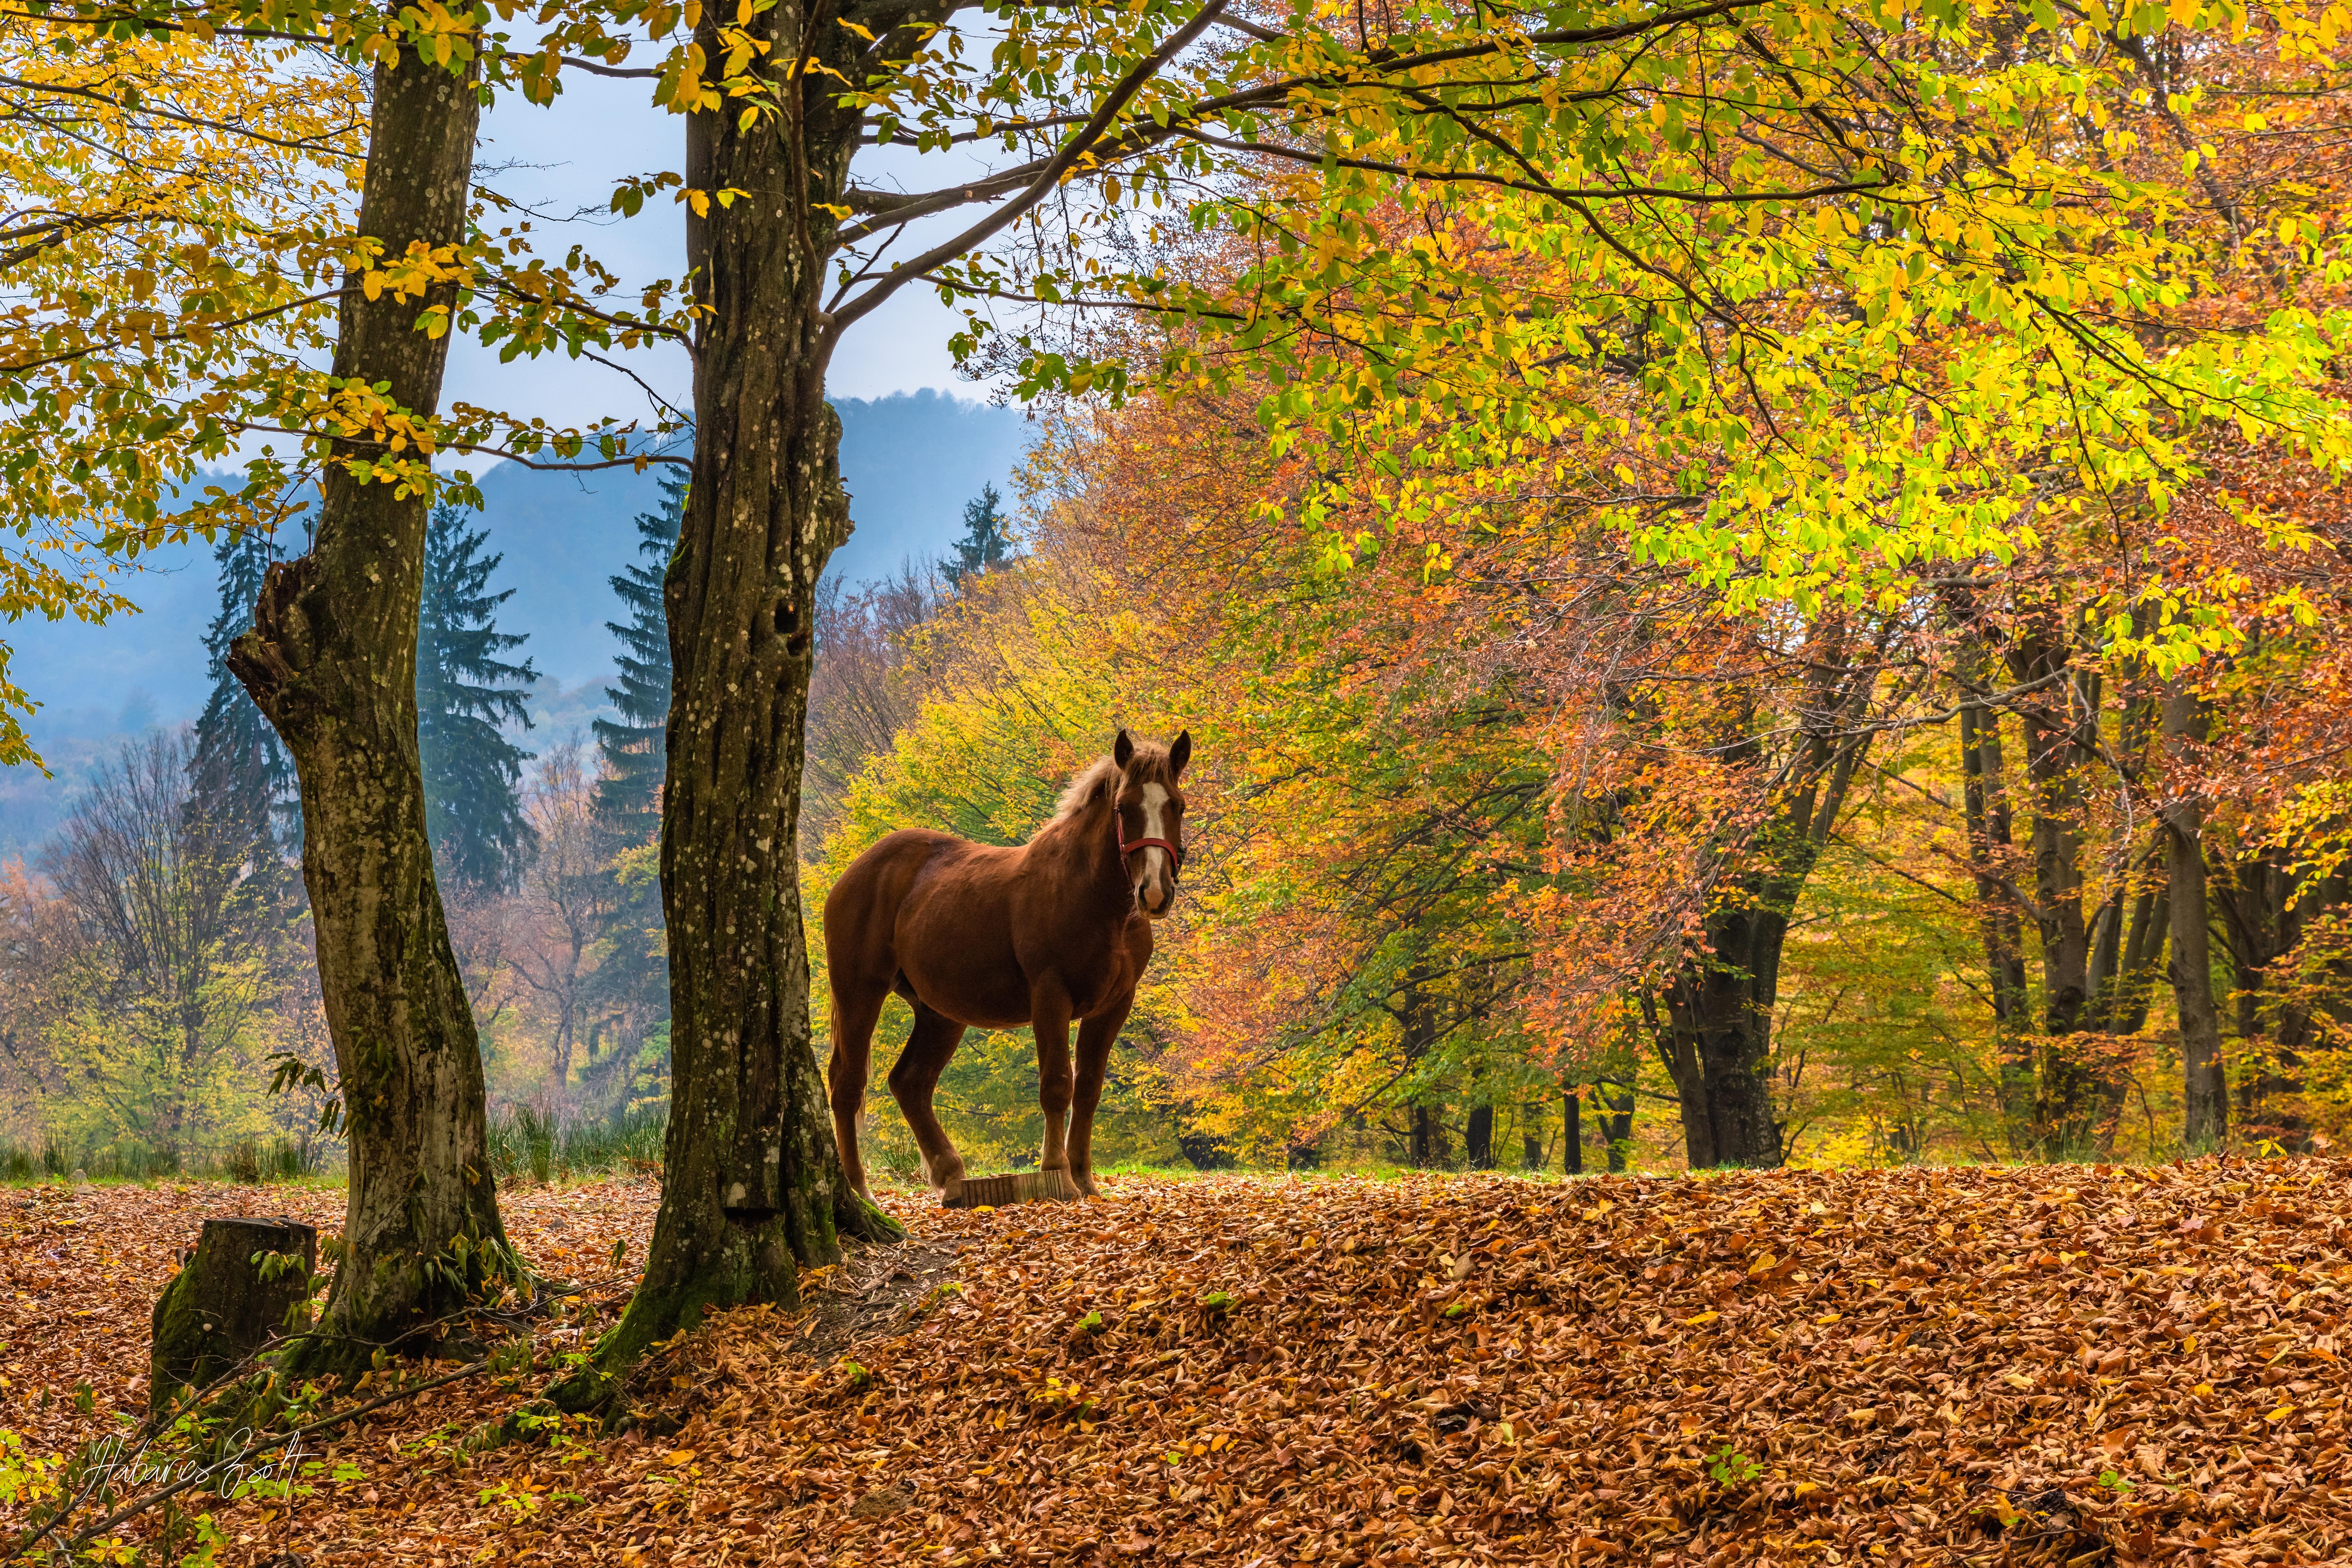 K trees horse leaves fall nature romania landscape